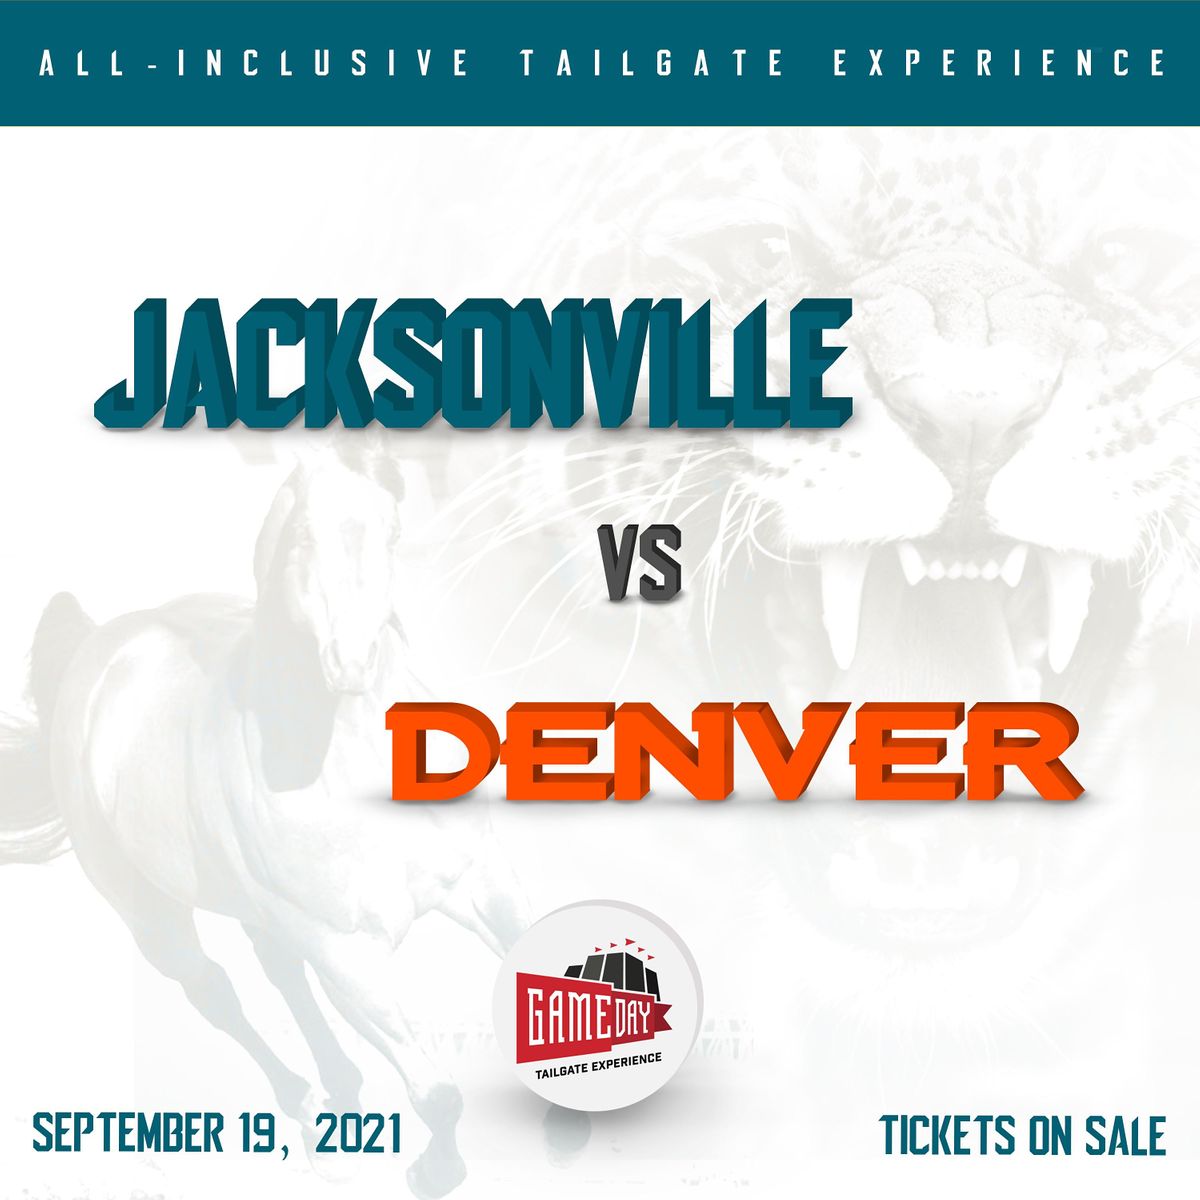 Jacksonville vs Denver All-Inclusive Tailgate Experience